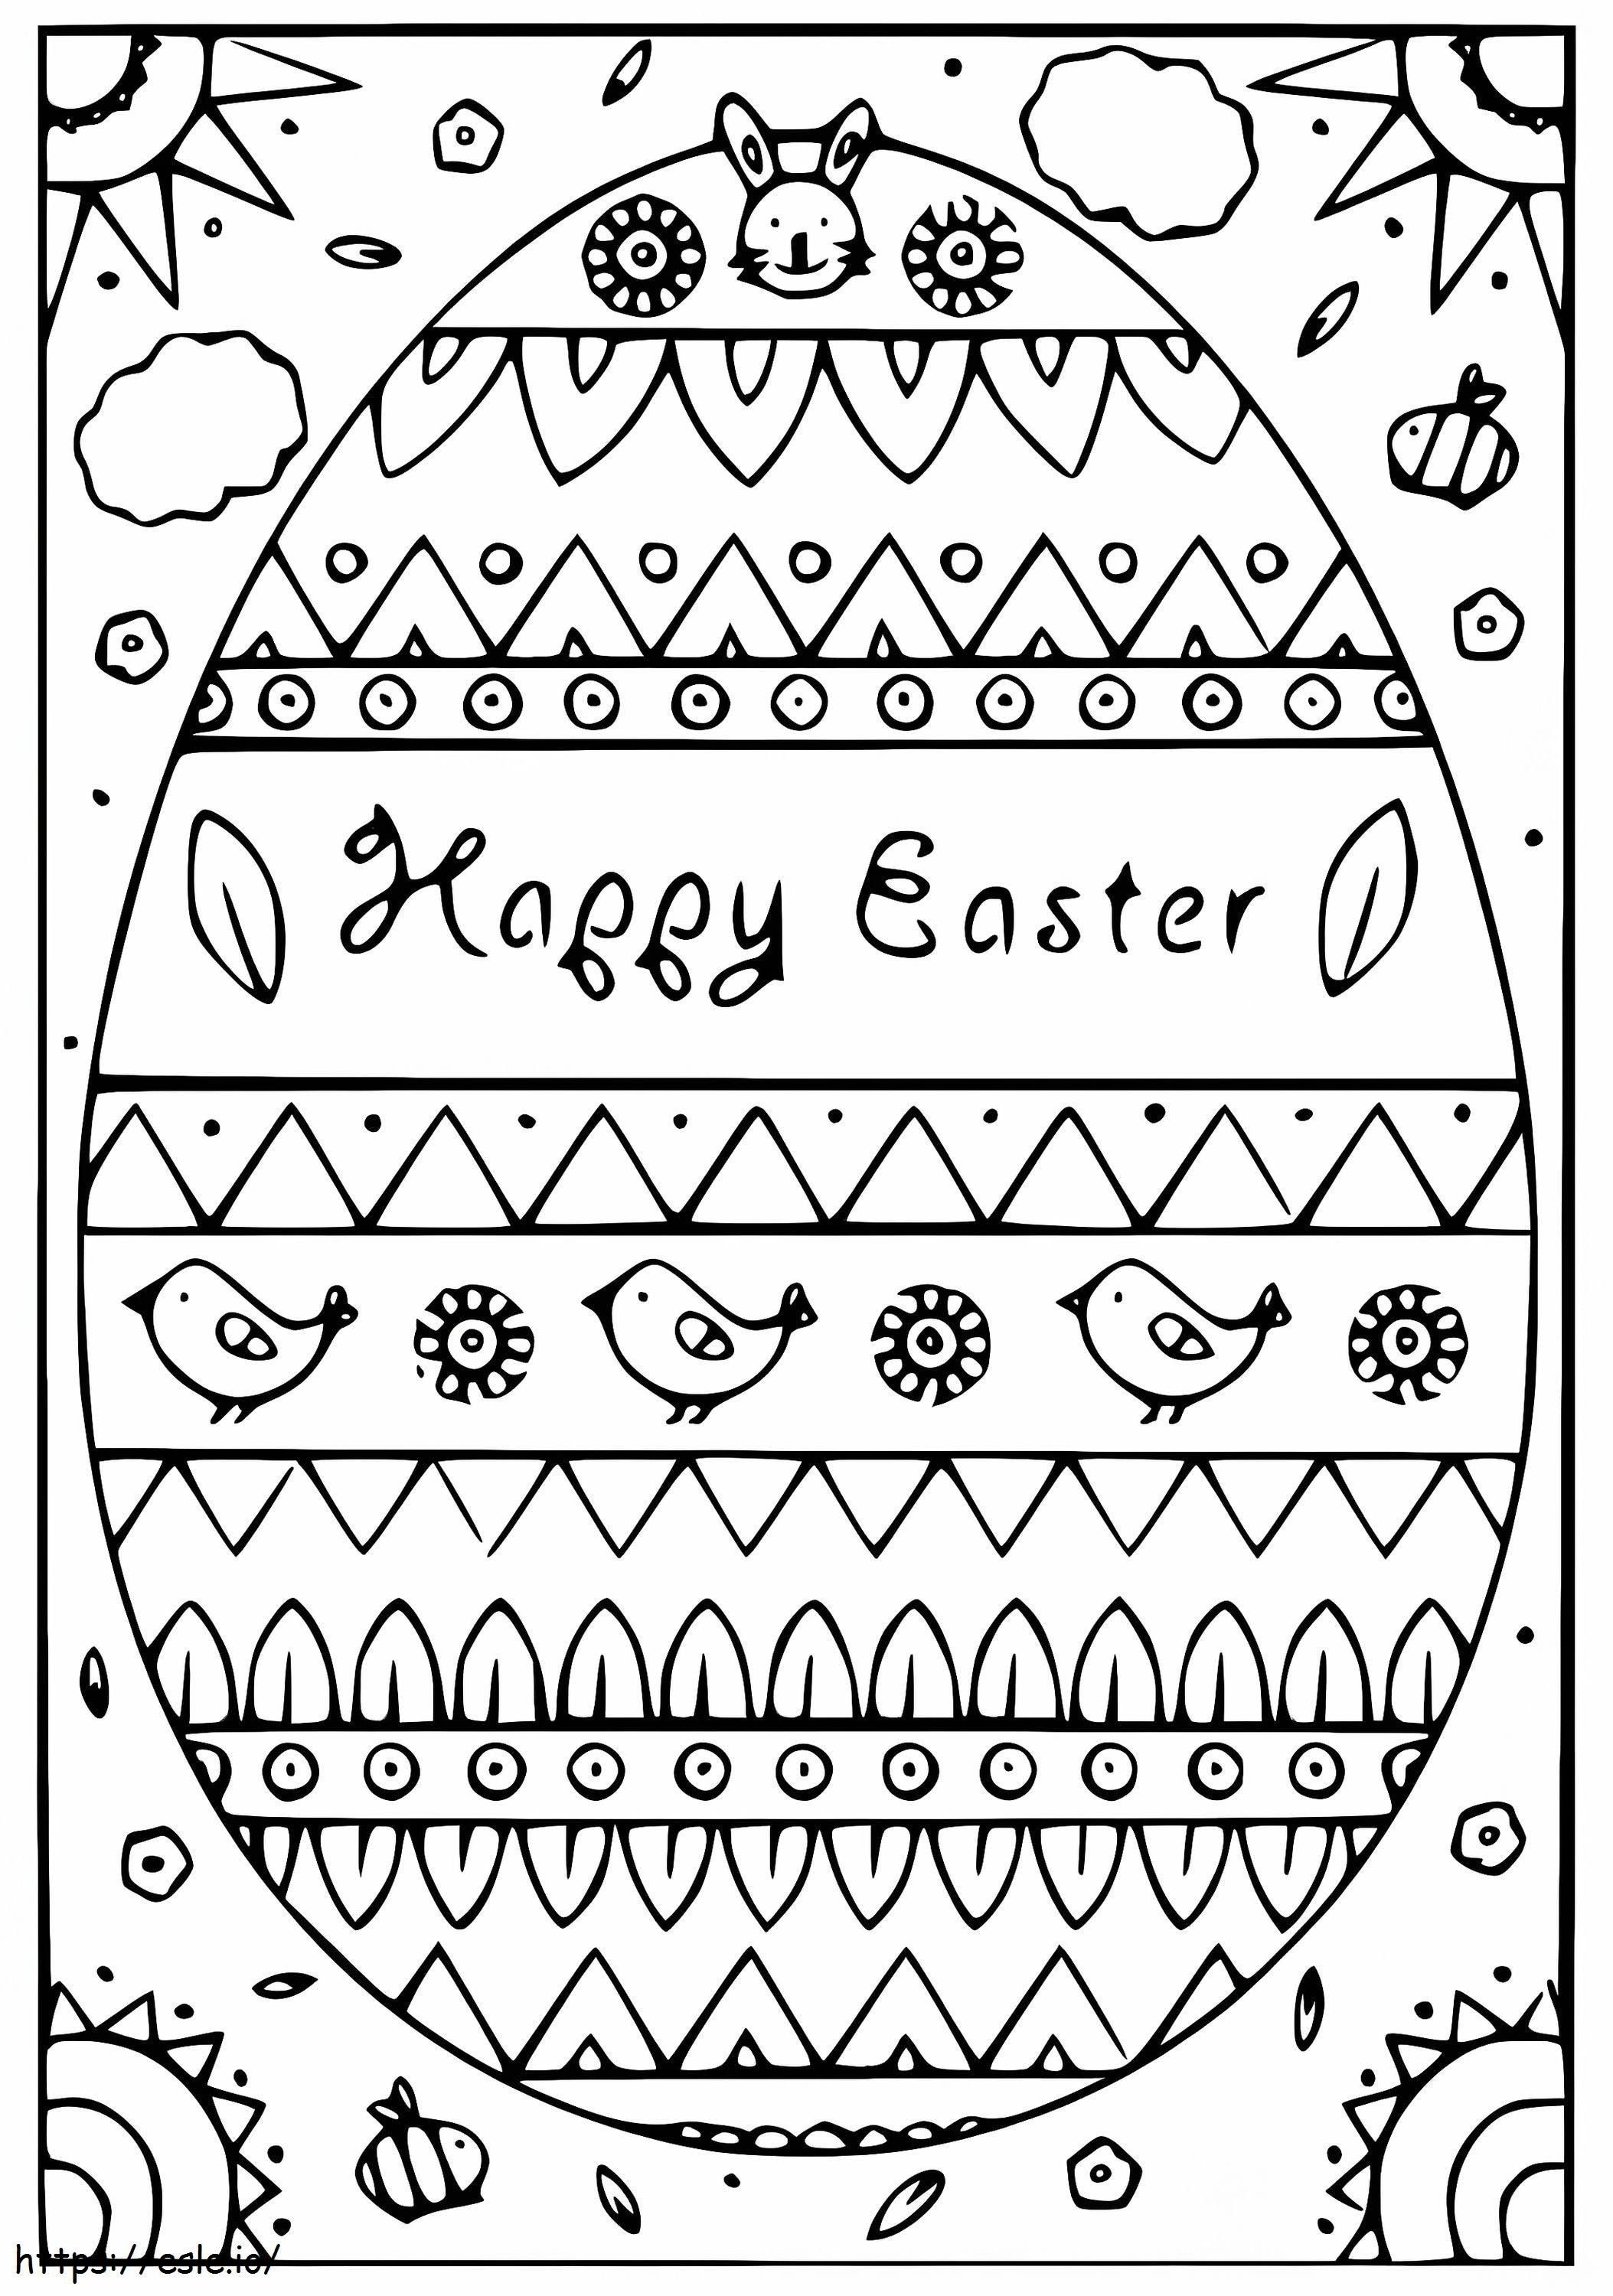 Tarjeta de Feliz Pascua para imprimir gratis para colorear